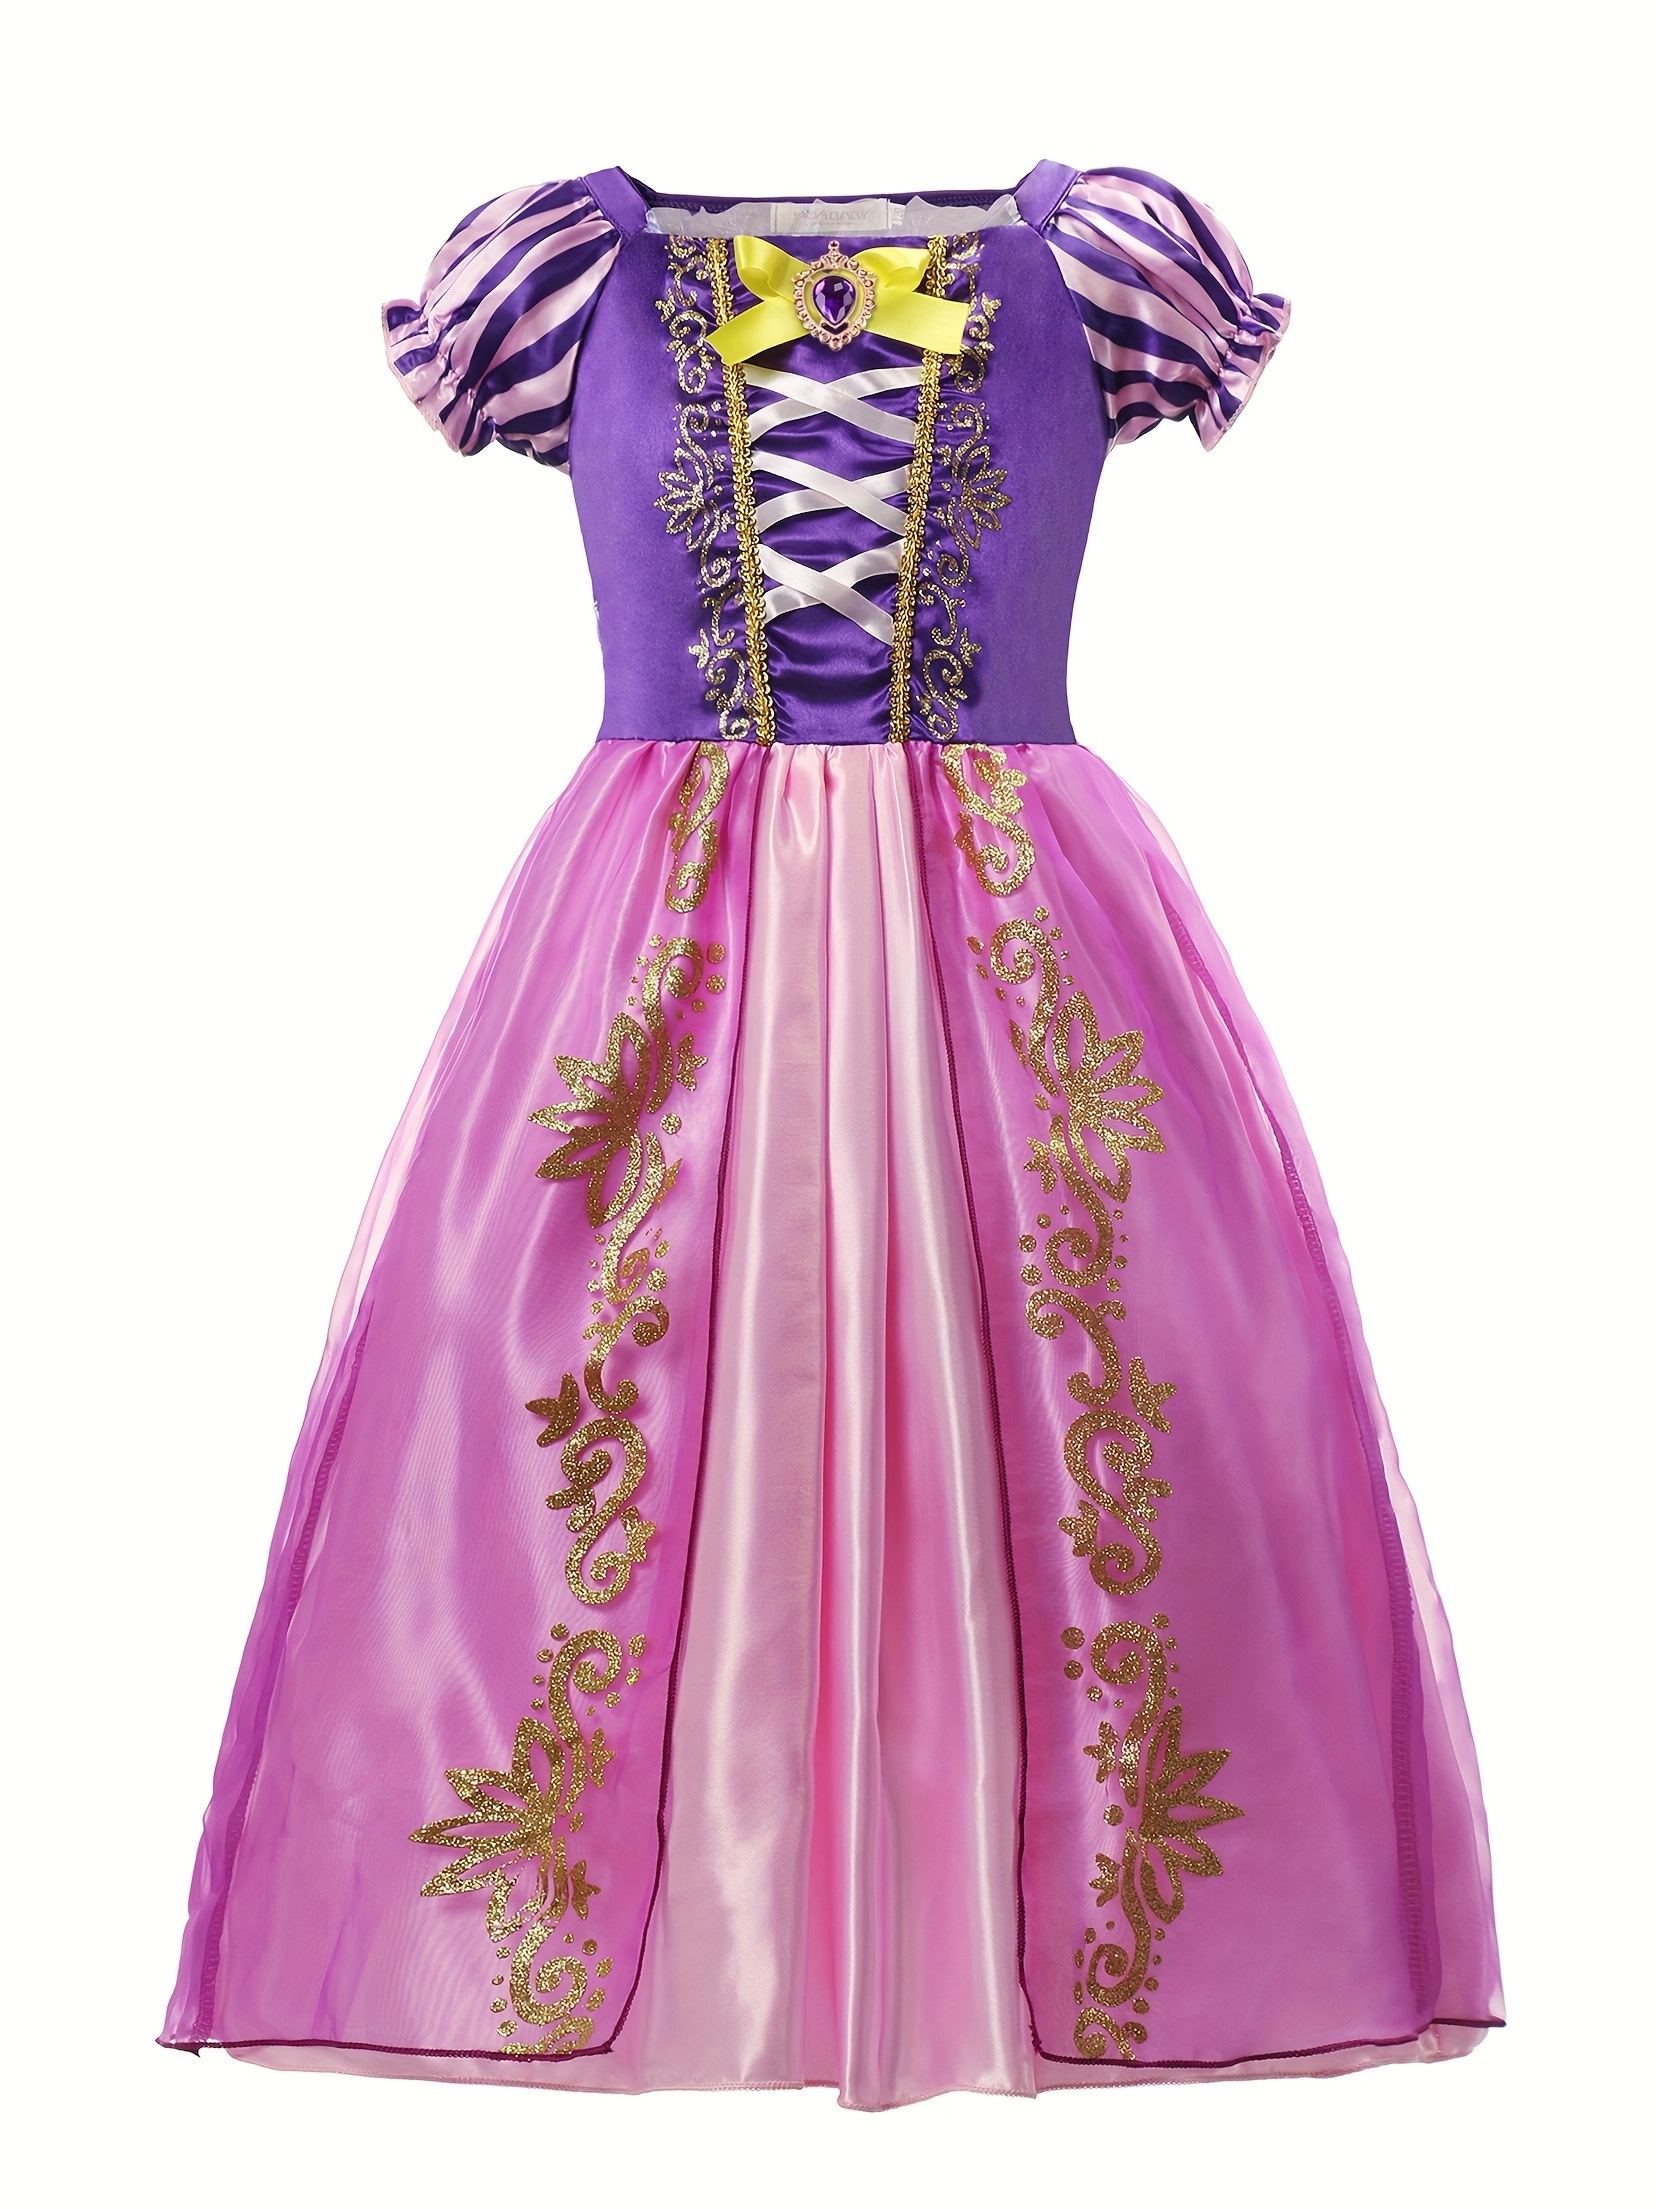 Princesa sofia traje para menina, traje cosplay roxo, manga puff